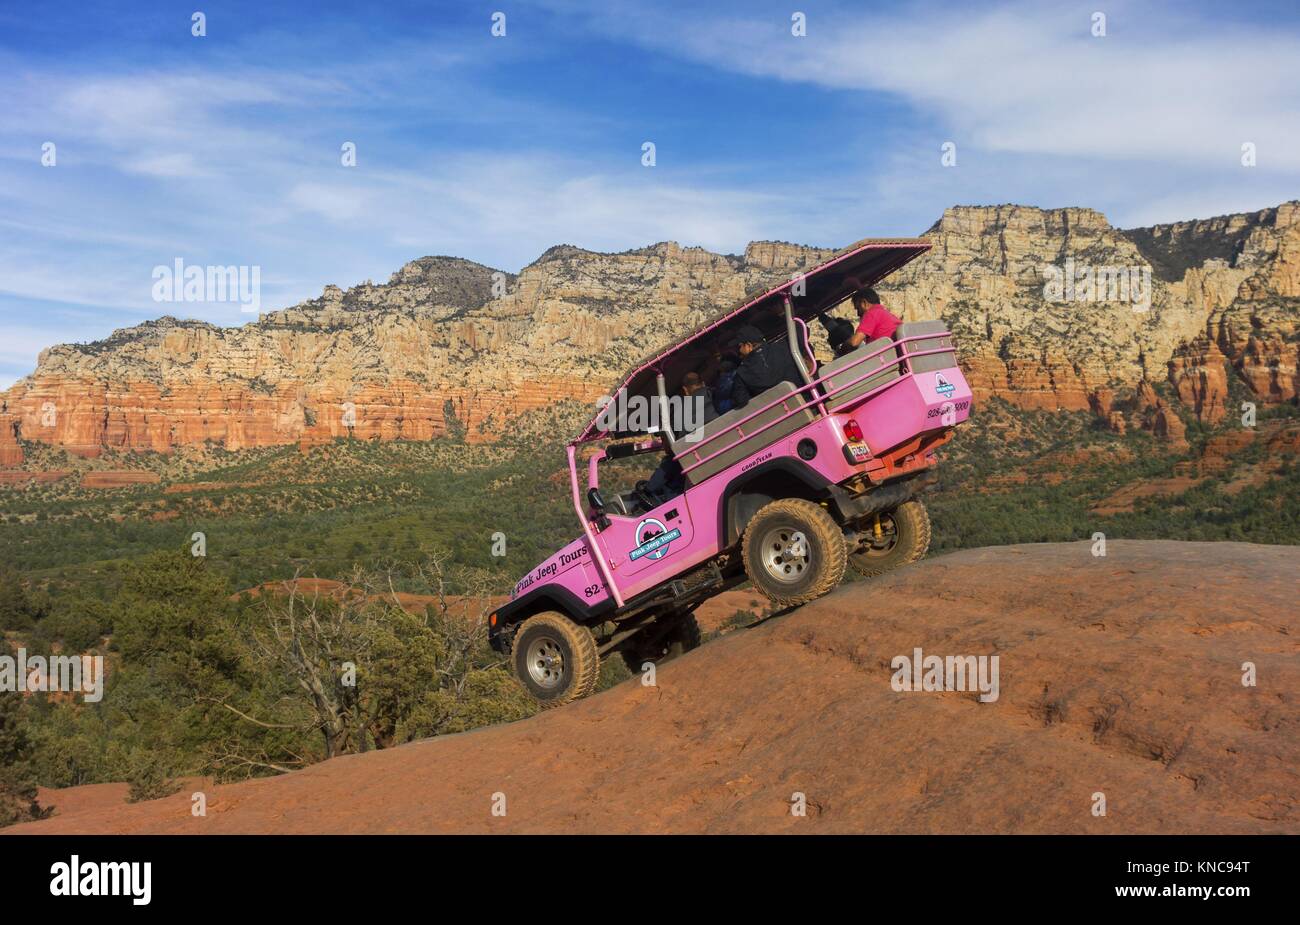 Pink Jeep Off Road High Clearance Terrain Vehicle touring Broken Arrow Slick Rock Desert Landscape with Tourists onboard near Sedona Arizona Stock Photo